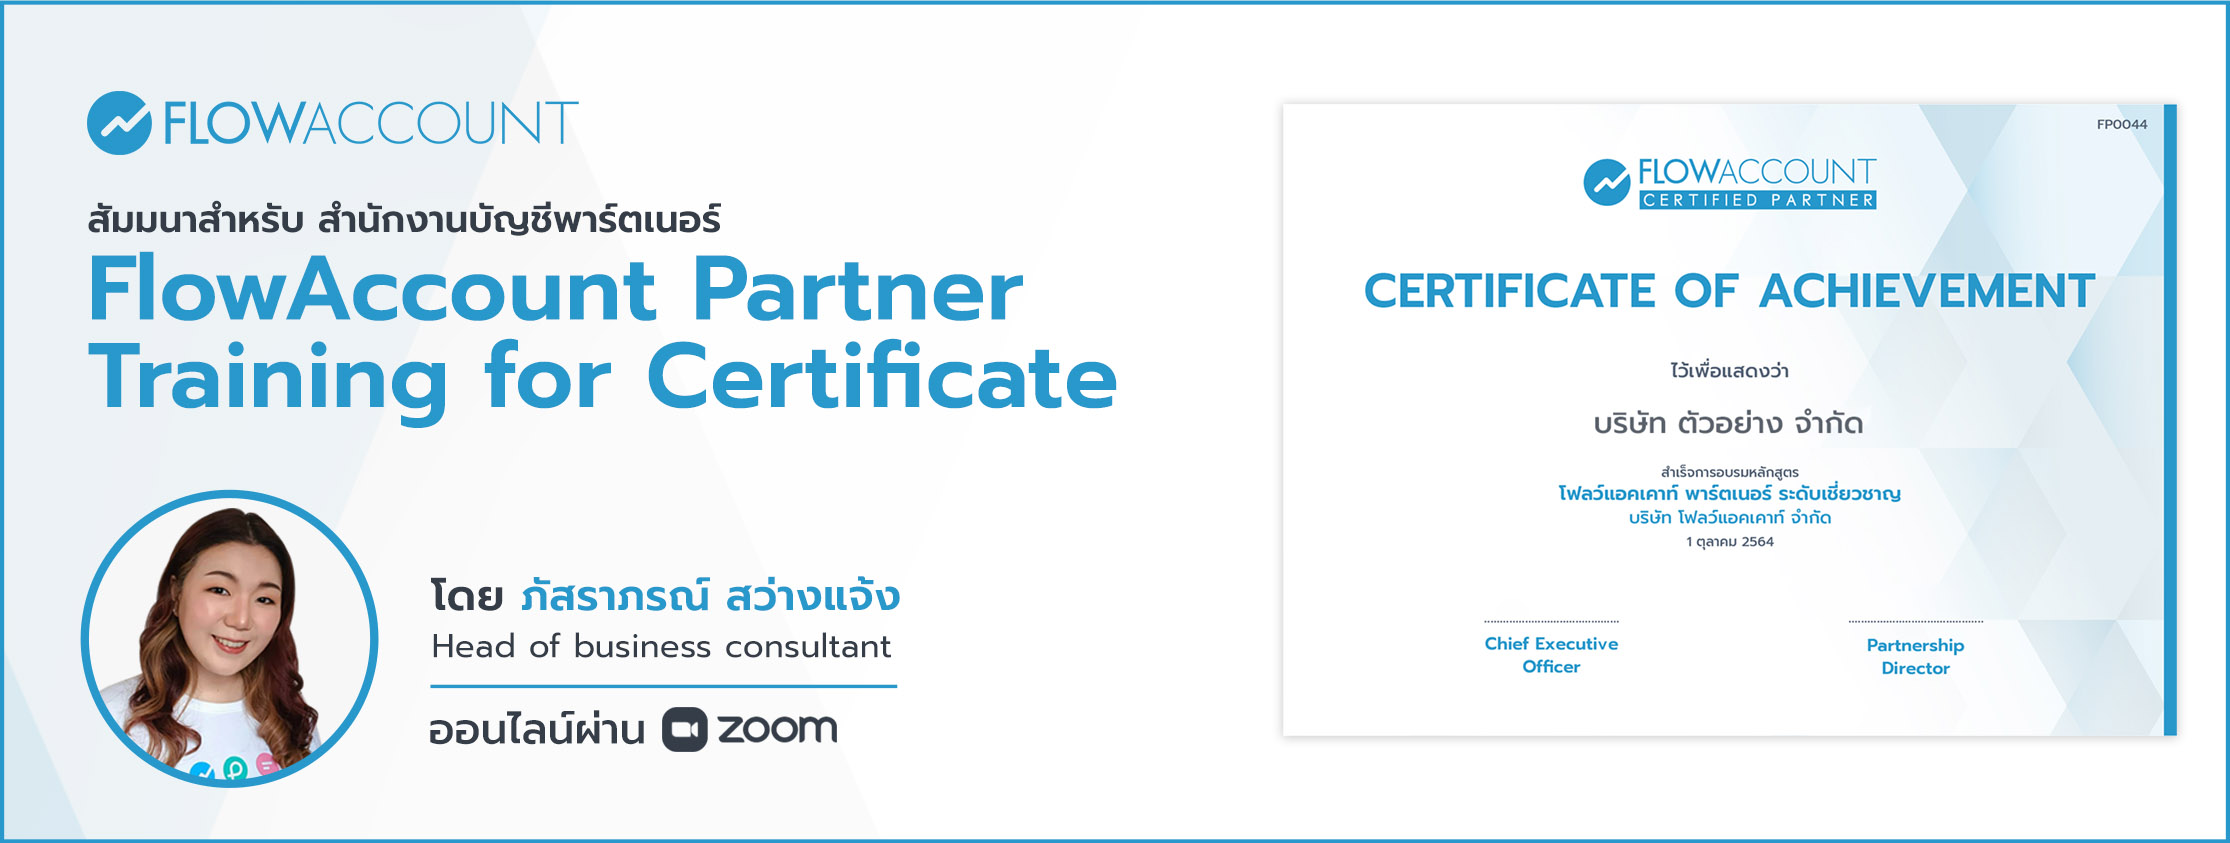 Email_Partner Training for Certificate